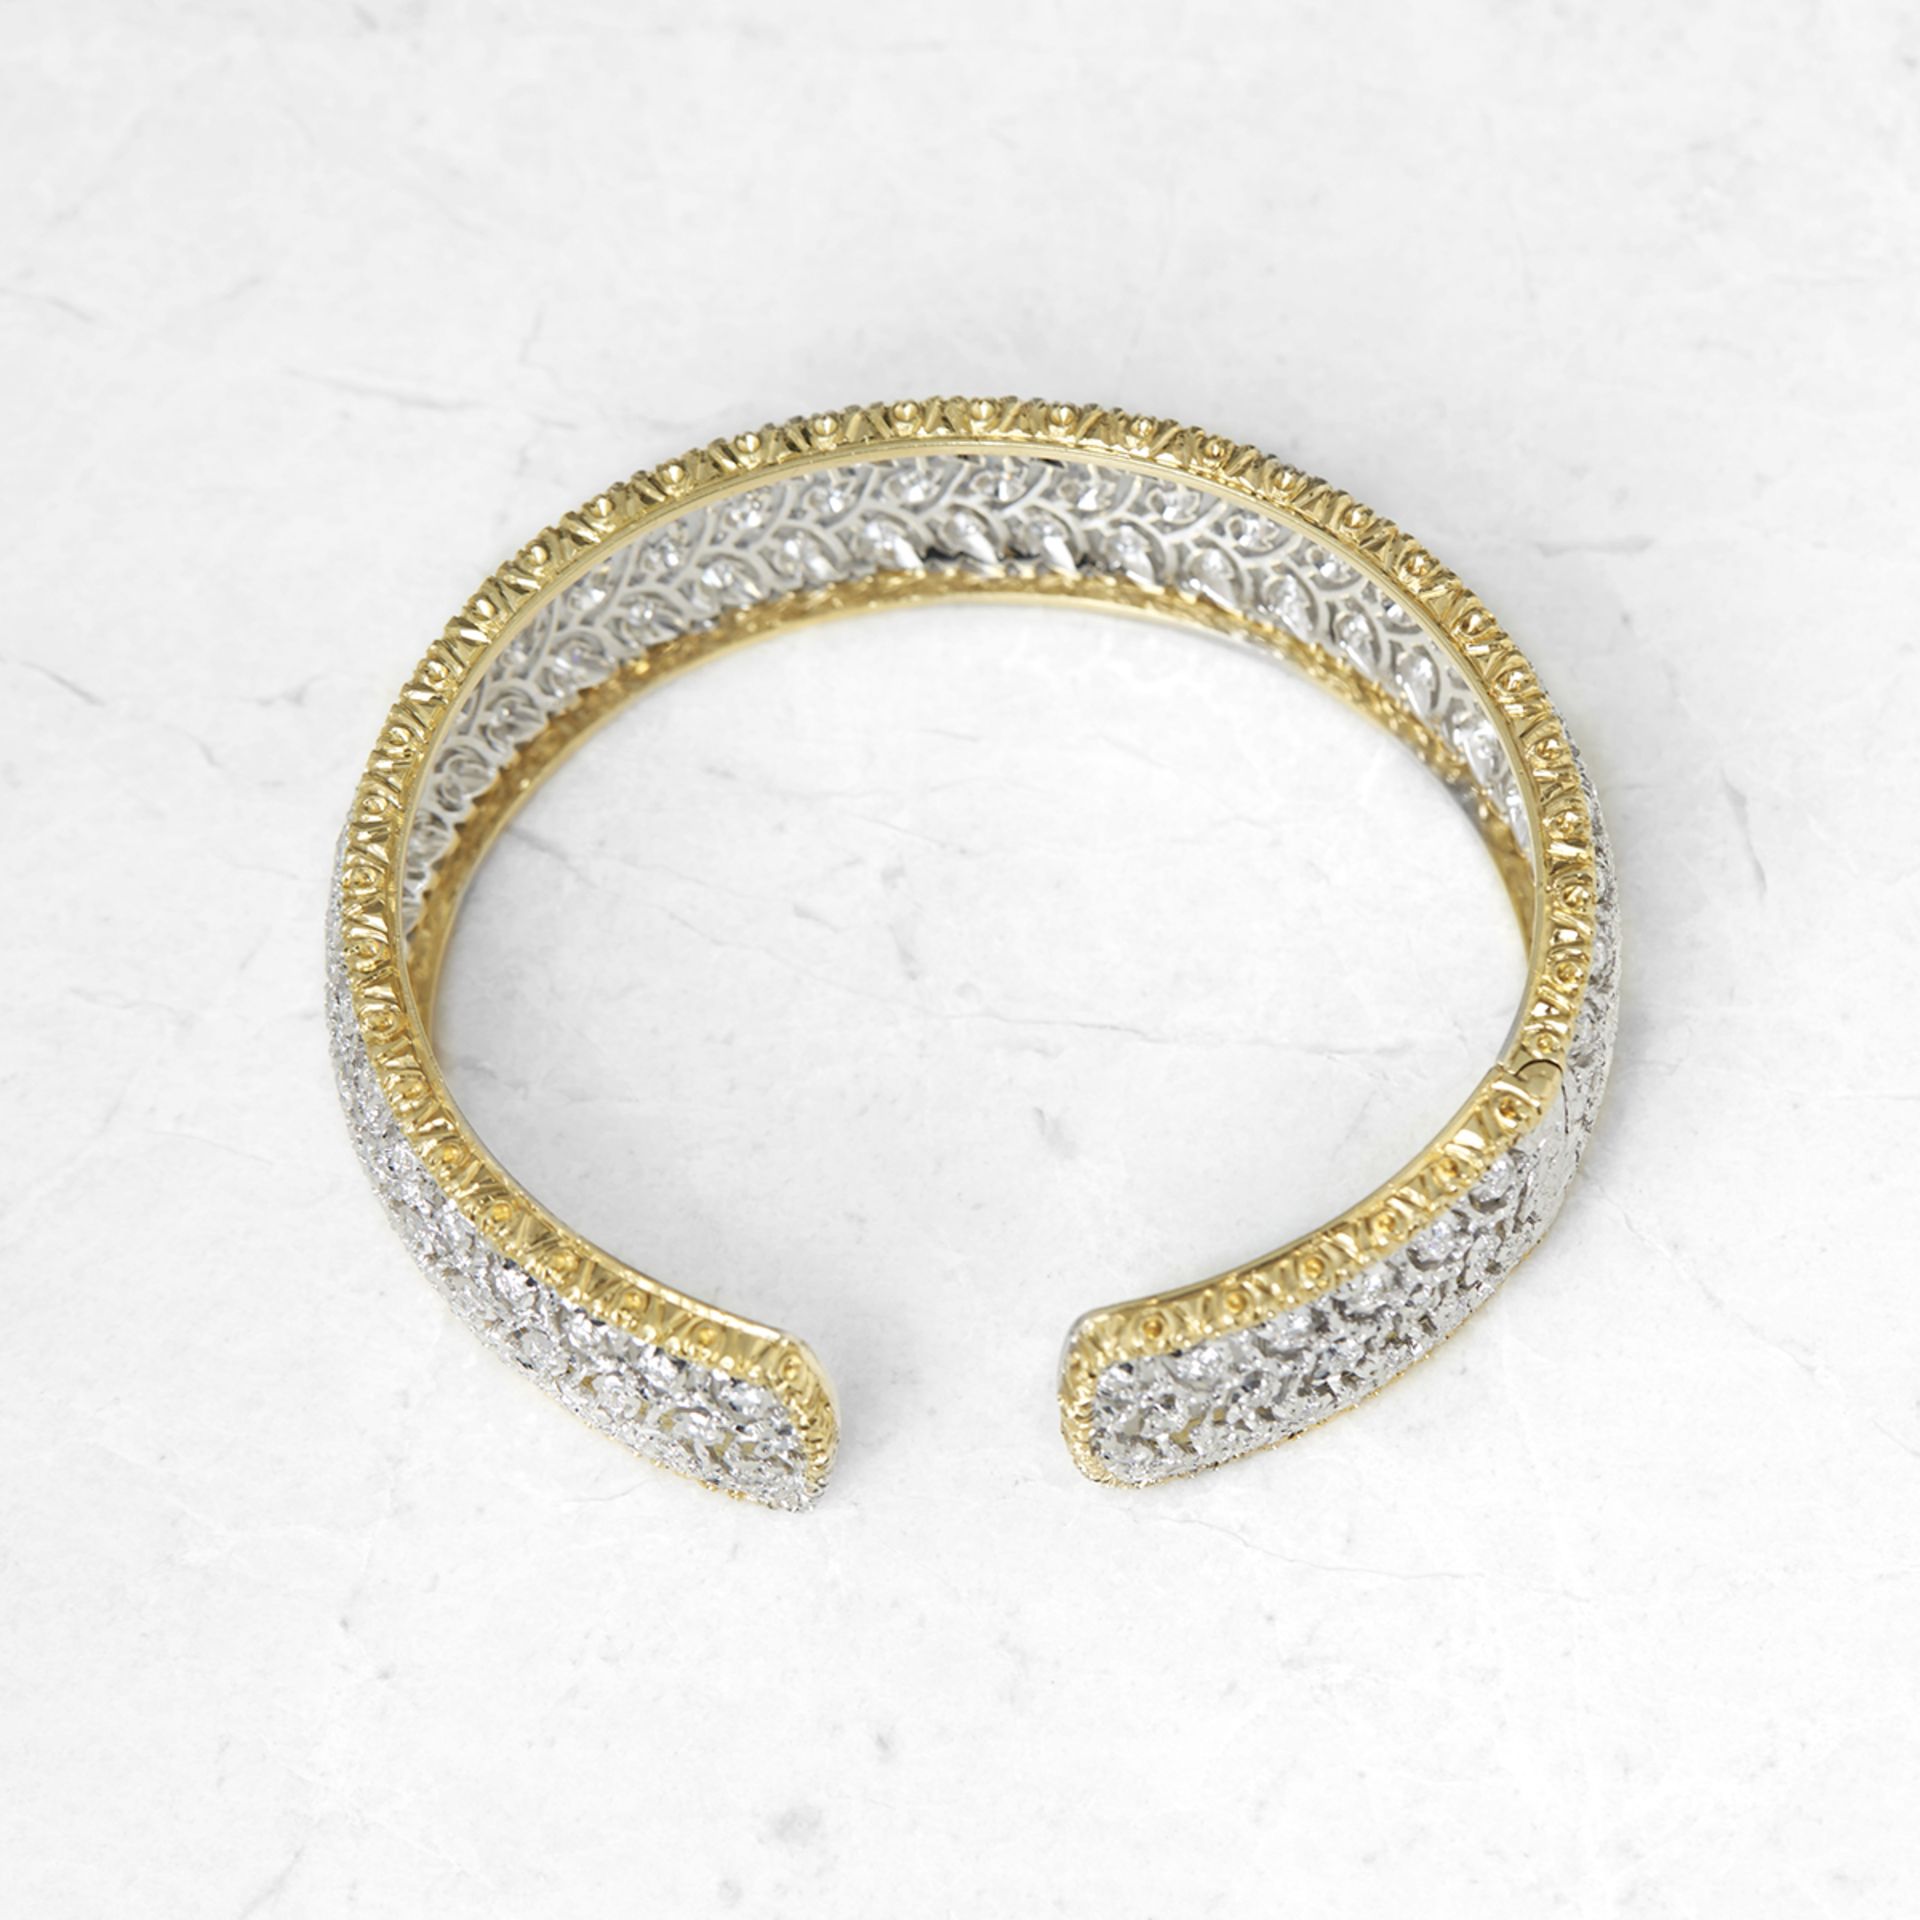 Buccellati 18k White & Yellow Gold 5.00ct Diamond Cuff Bracelet with Presentation Box - Image 8 of 8